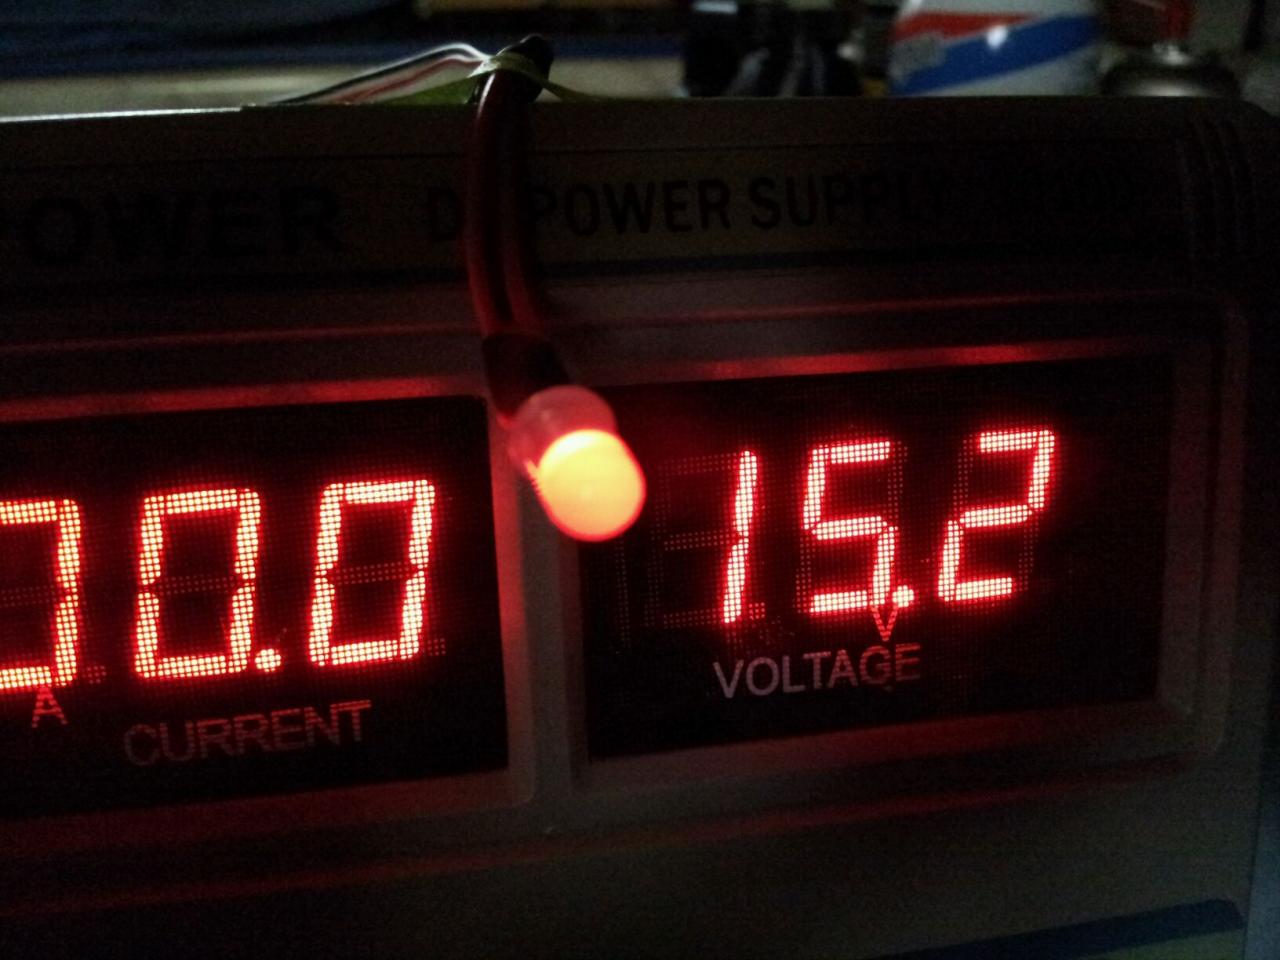 LED voltage monitor, starts red/green flashing at 15.2 vdc.